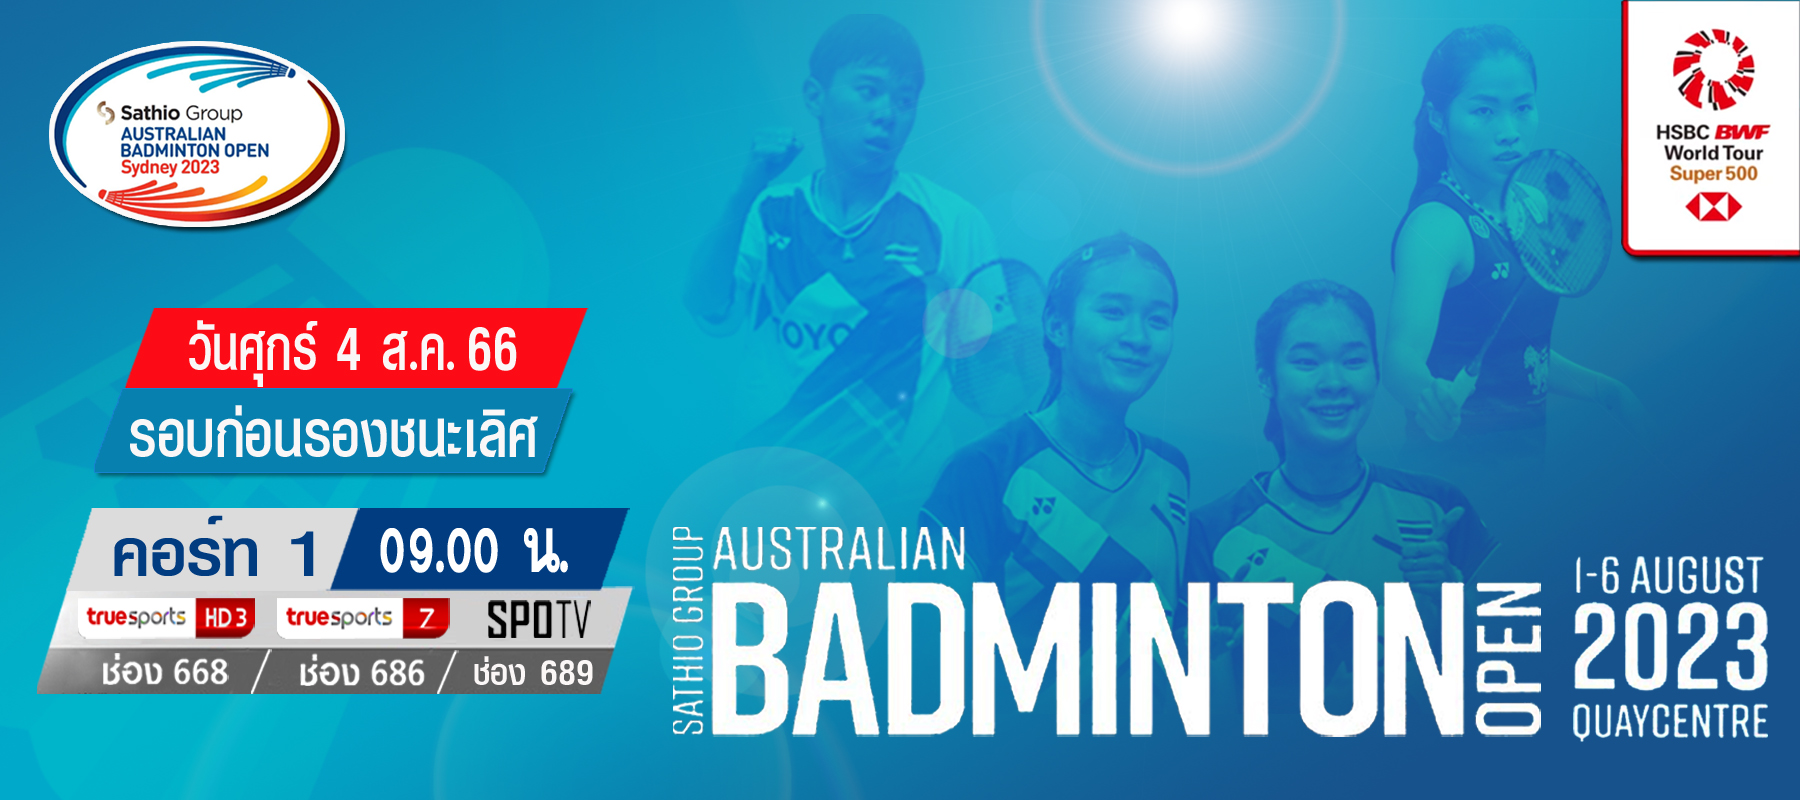 live streaming badminton thailand open 2021